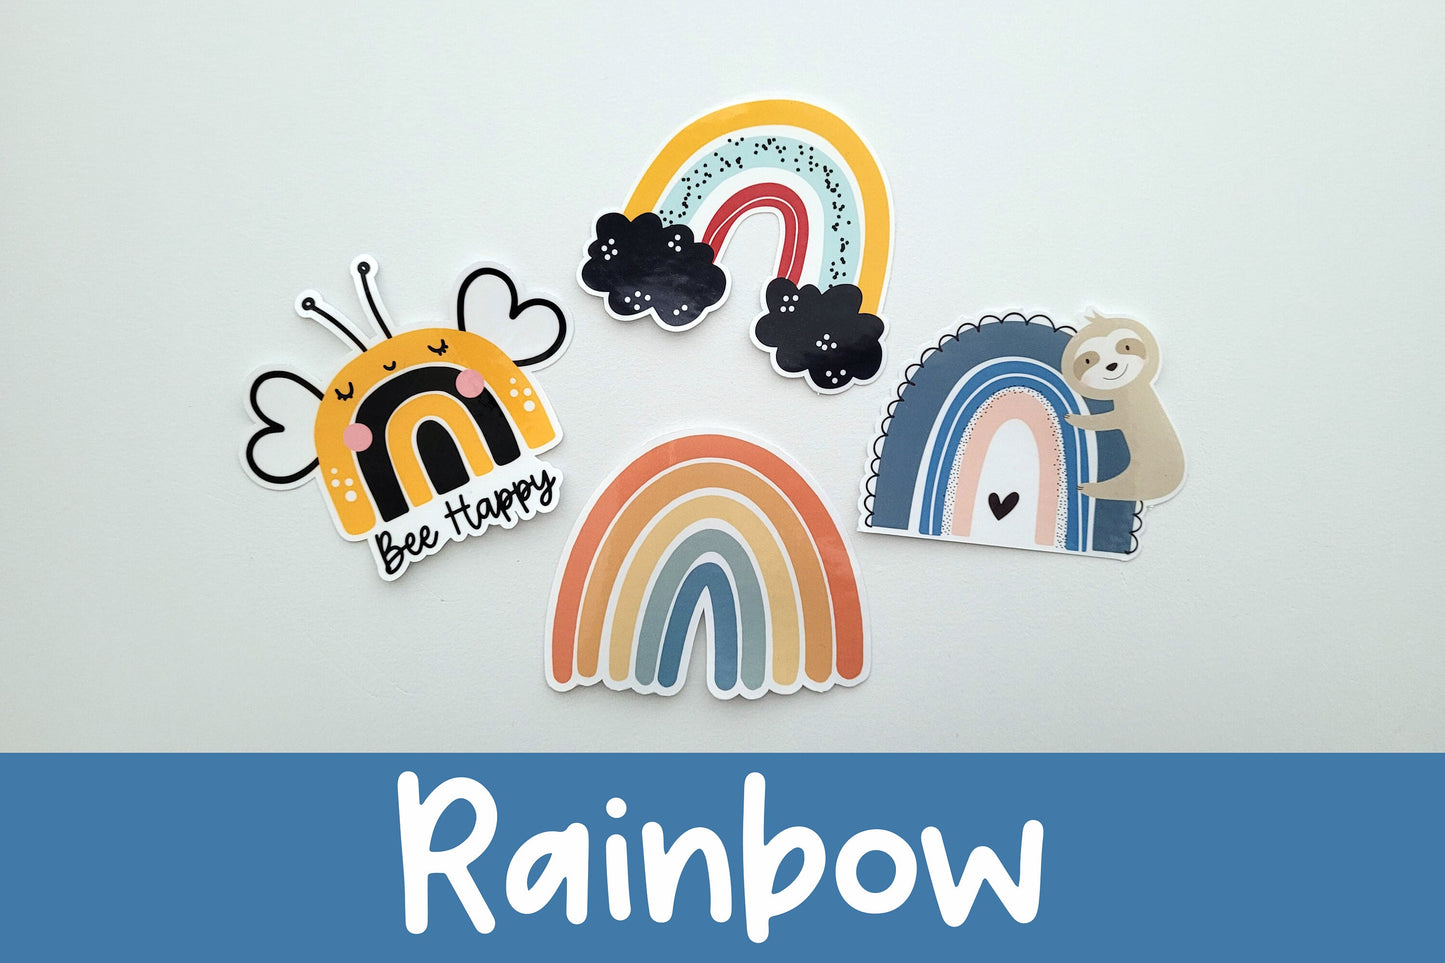 Rainbow Vinyl Sticker | Sloth | Bee Happy | Snowboard Sticker | Laptop Sticker | Water Bottle Sticker | Weatherproof | Waterproof | Decal